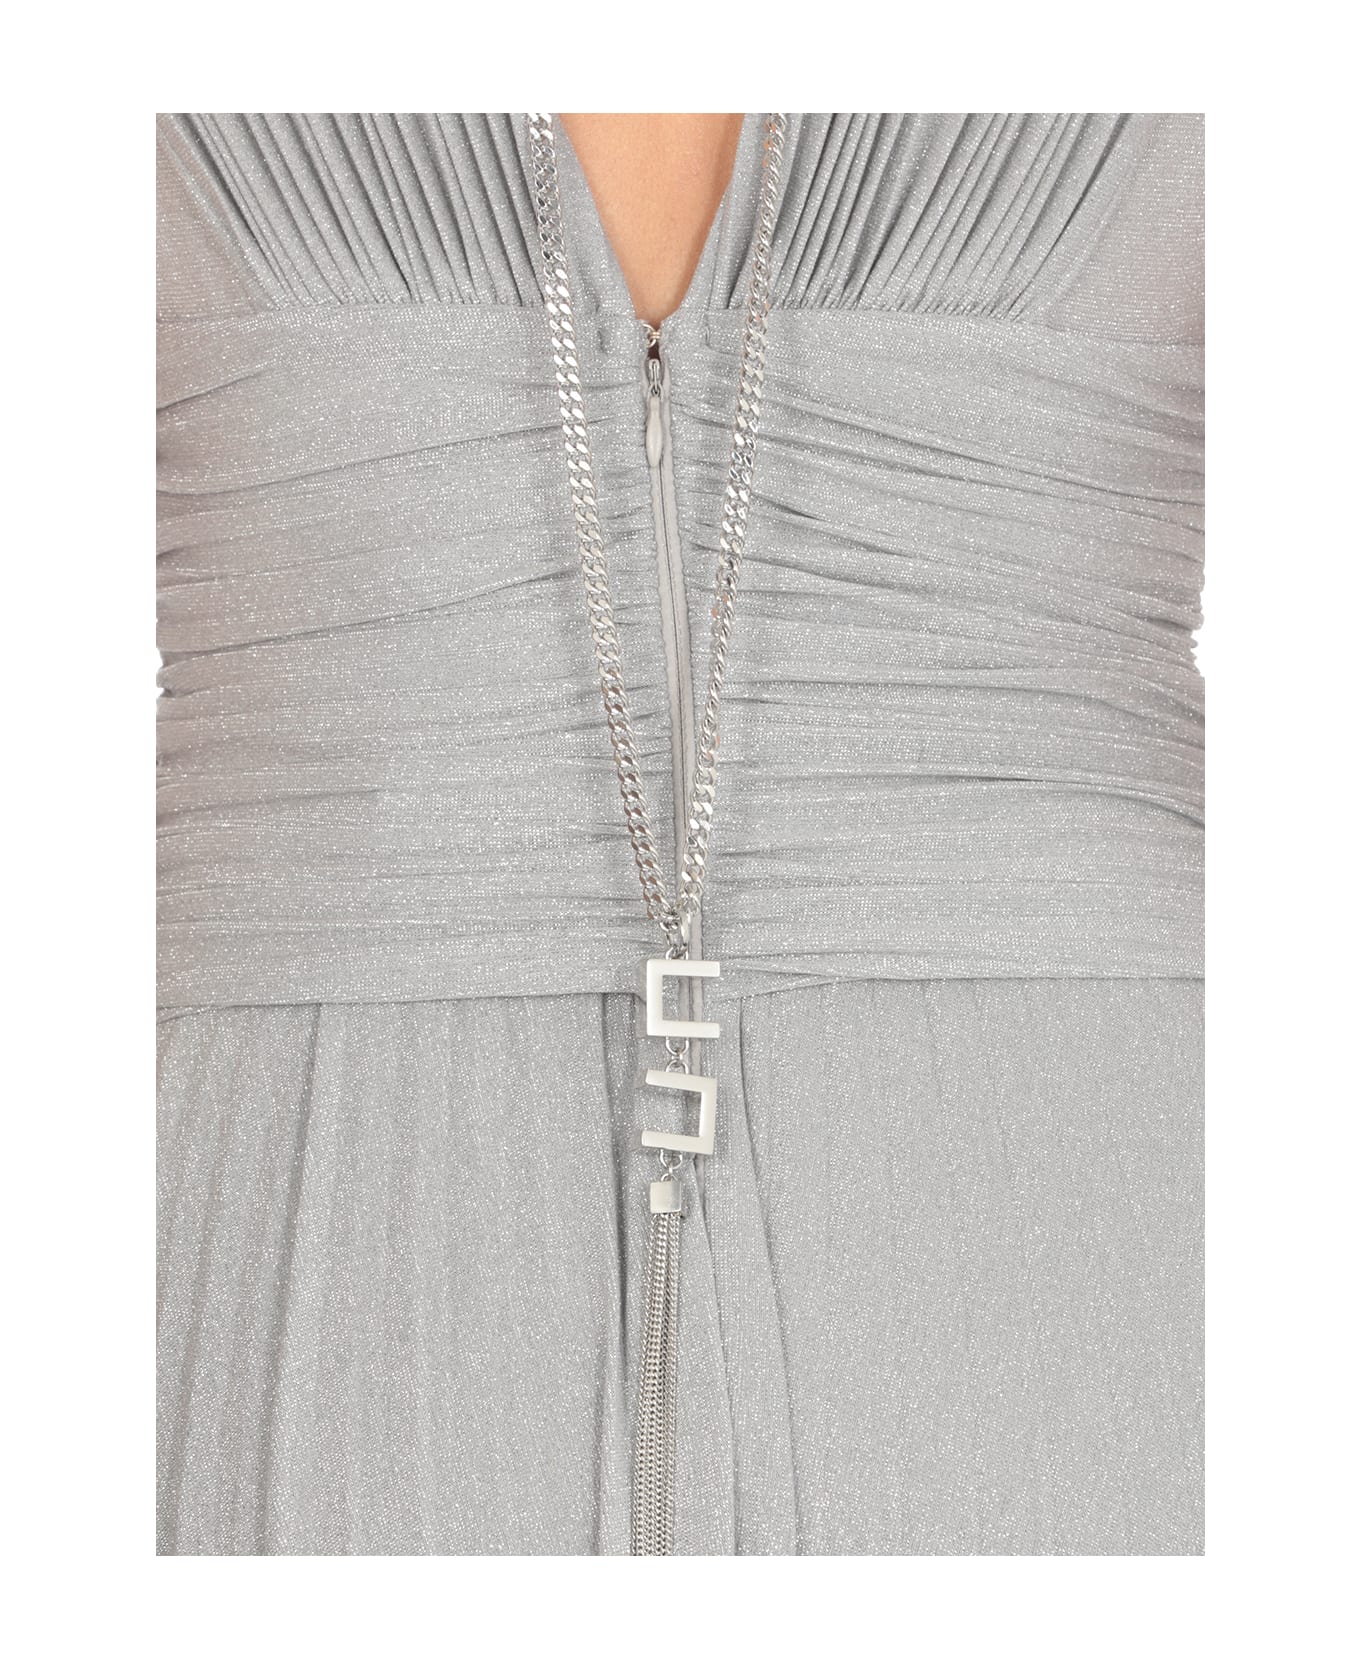 Elisabetta Franchi Sleeveless Pleated Long Dress - Silver ワンピース＆ドレス